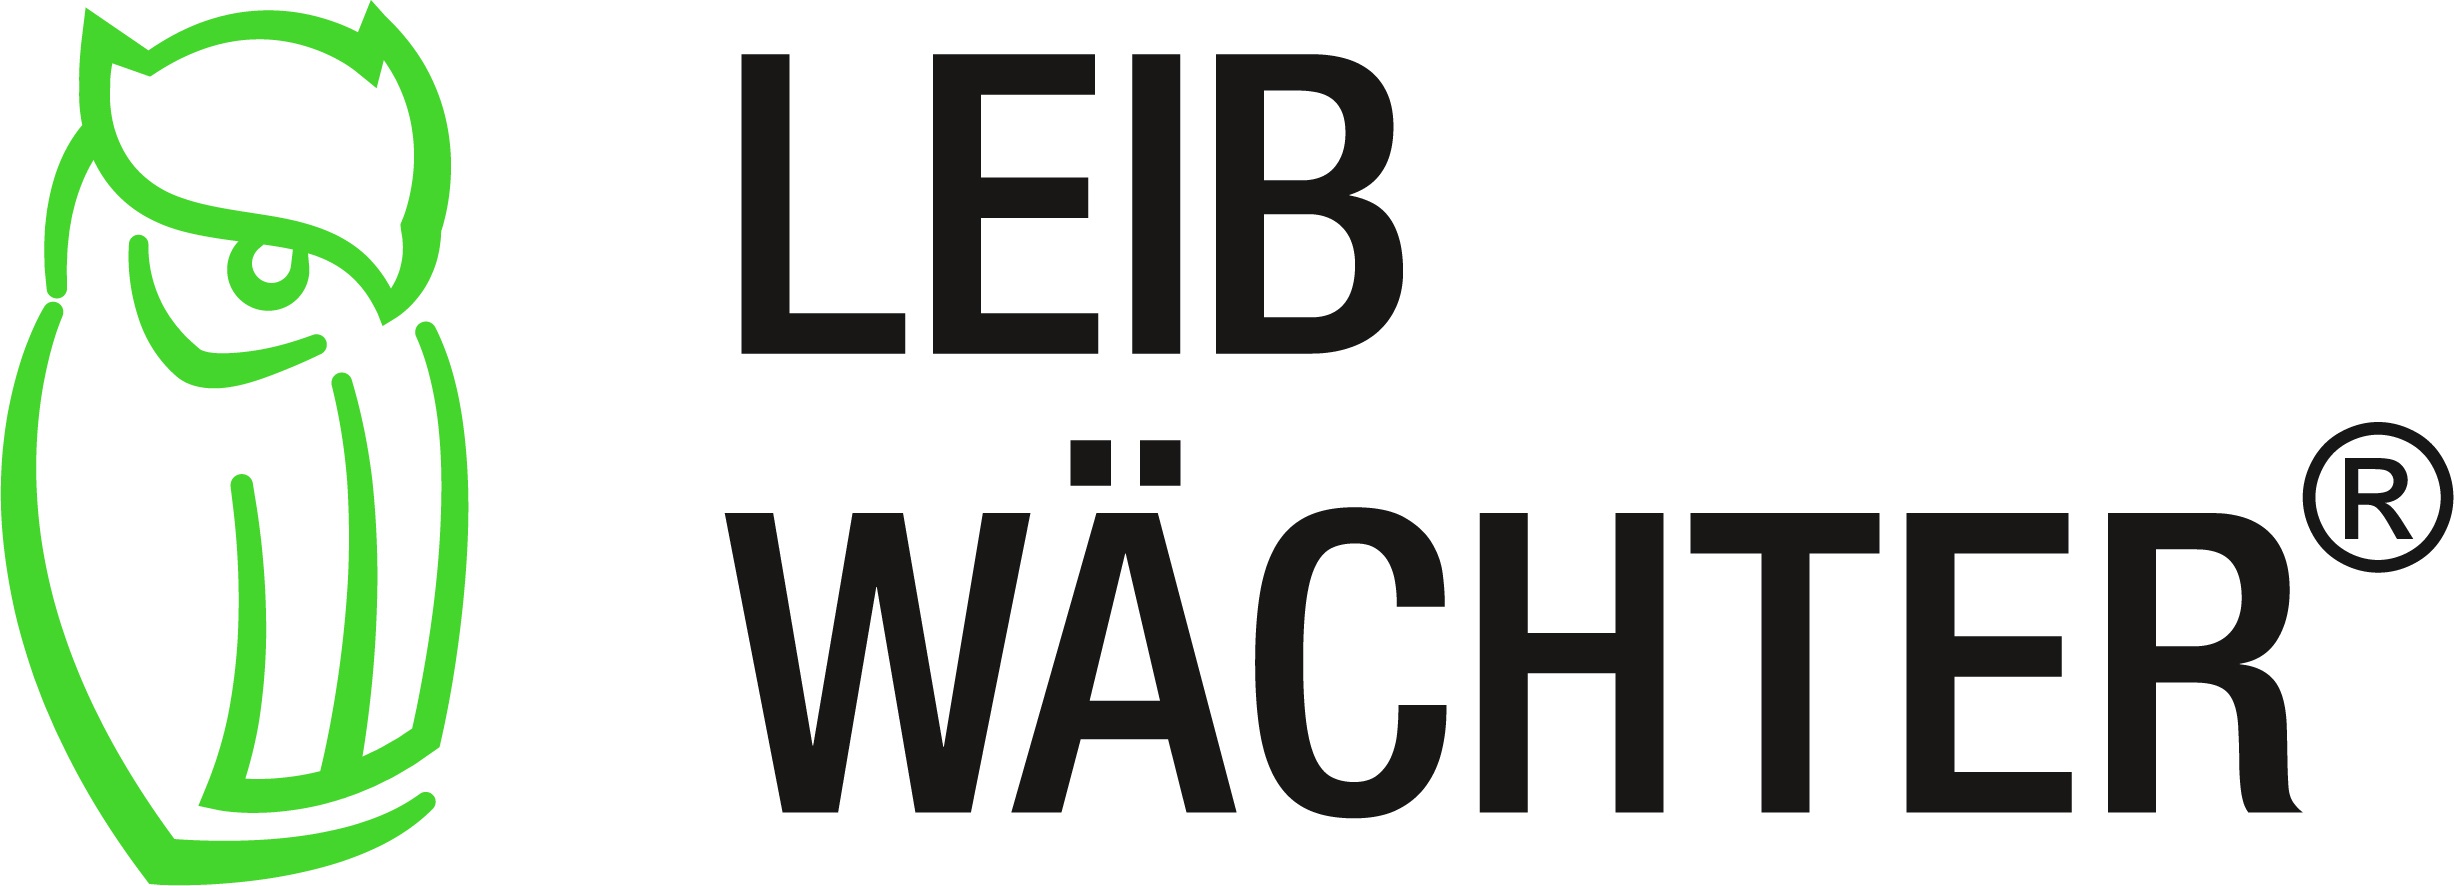 Leib Wachter